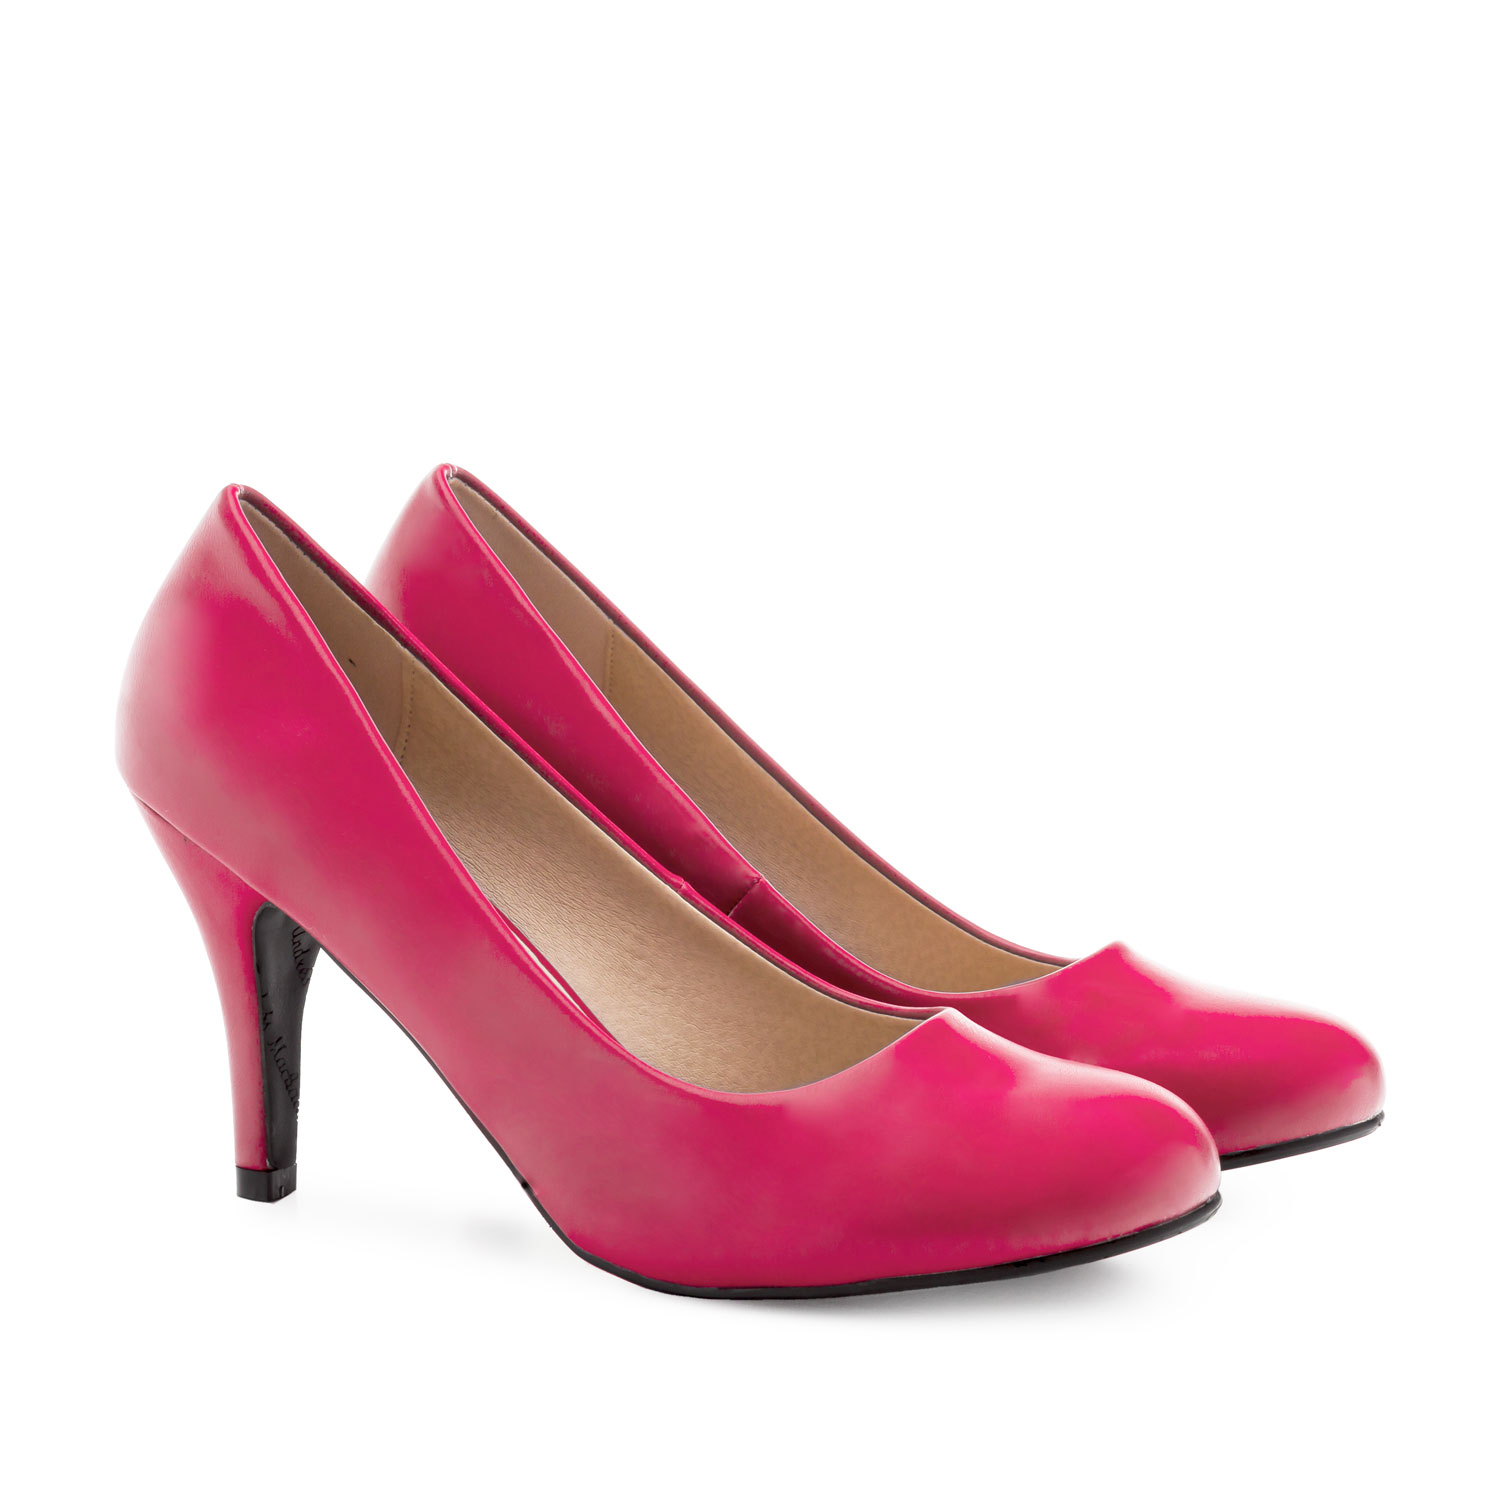 Retro in Fuchsia faux Soft-Leather - Large Sizes, Petite Heeled Shoes, WOMEN,